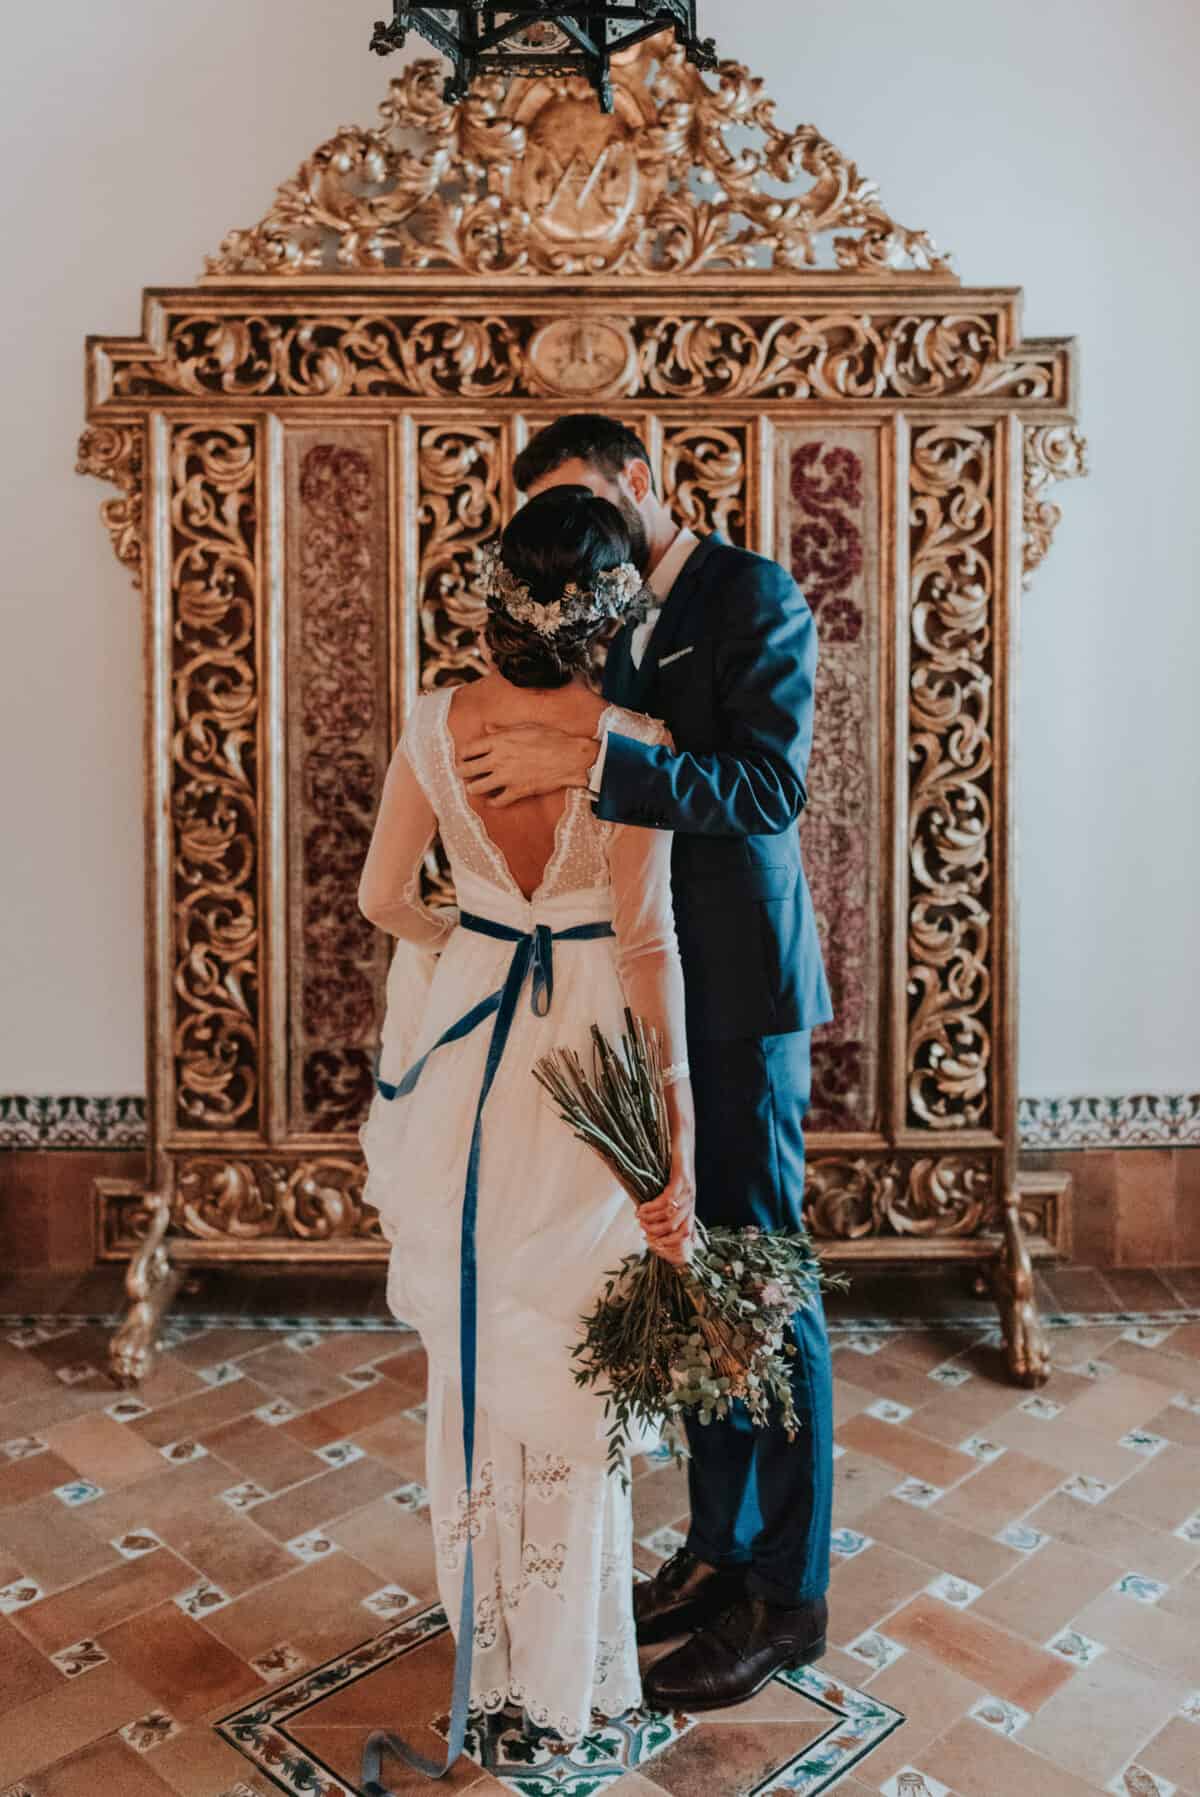 La novia del vestido del lazo de terciopelo azul - Las bodas de Tatín